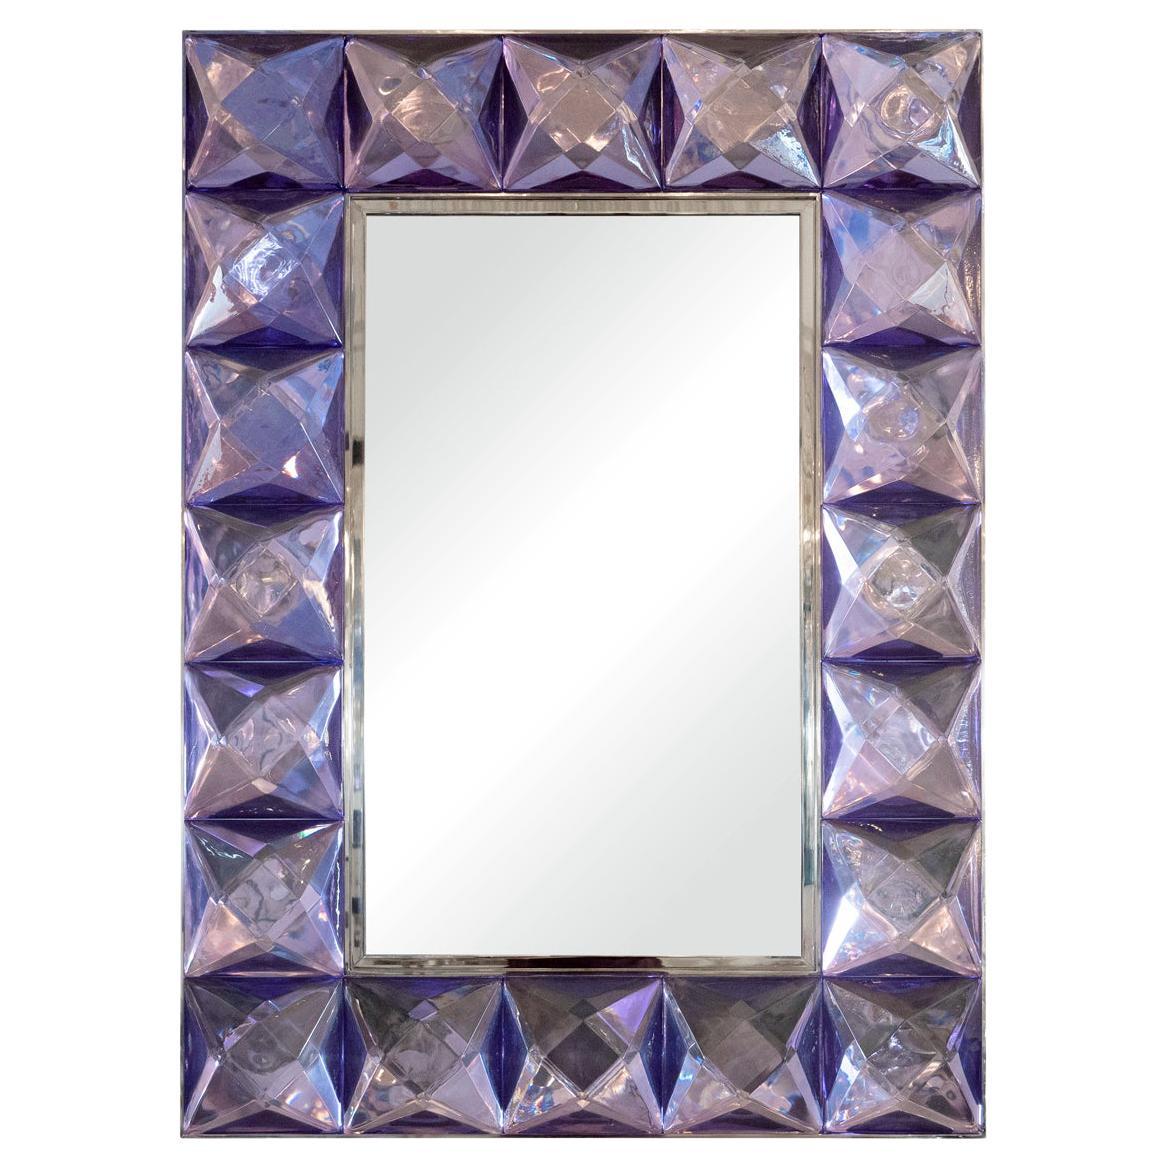 Rectangular mirror with lavender glass jewel surround.